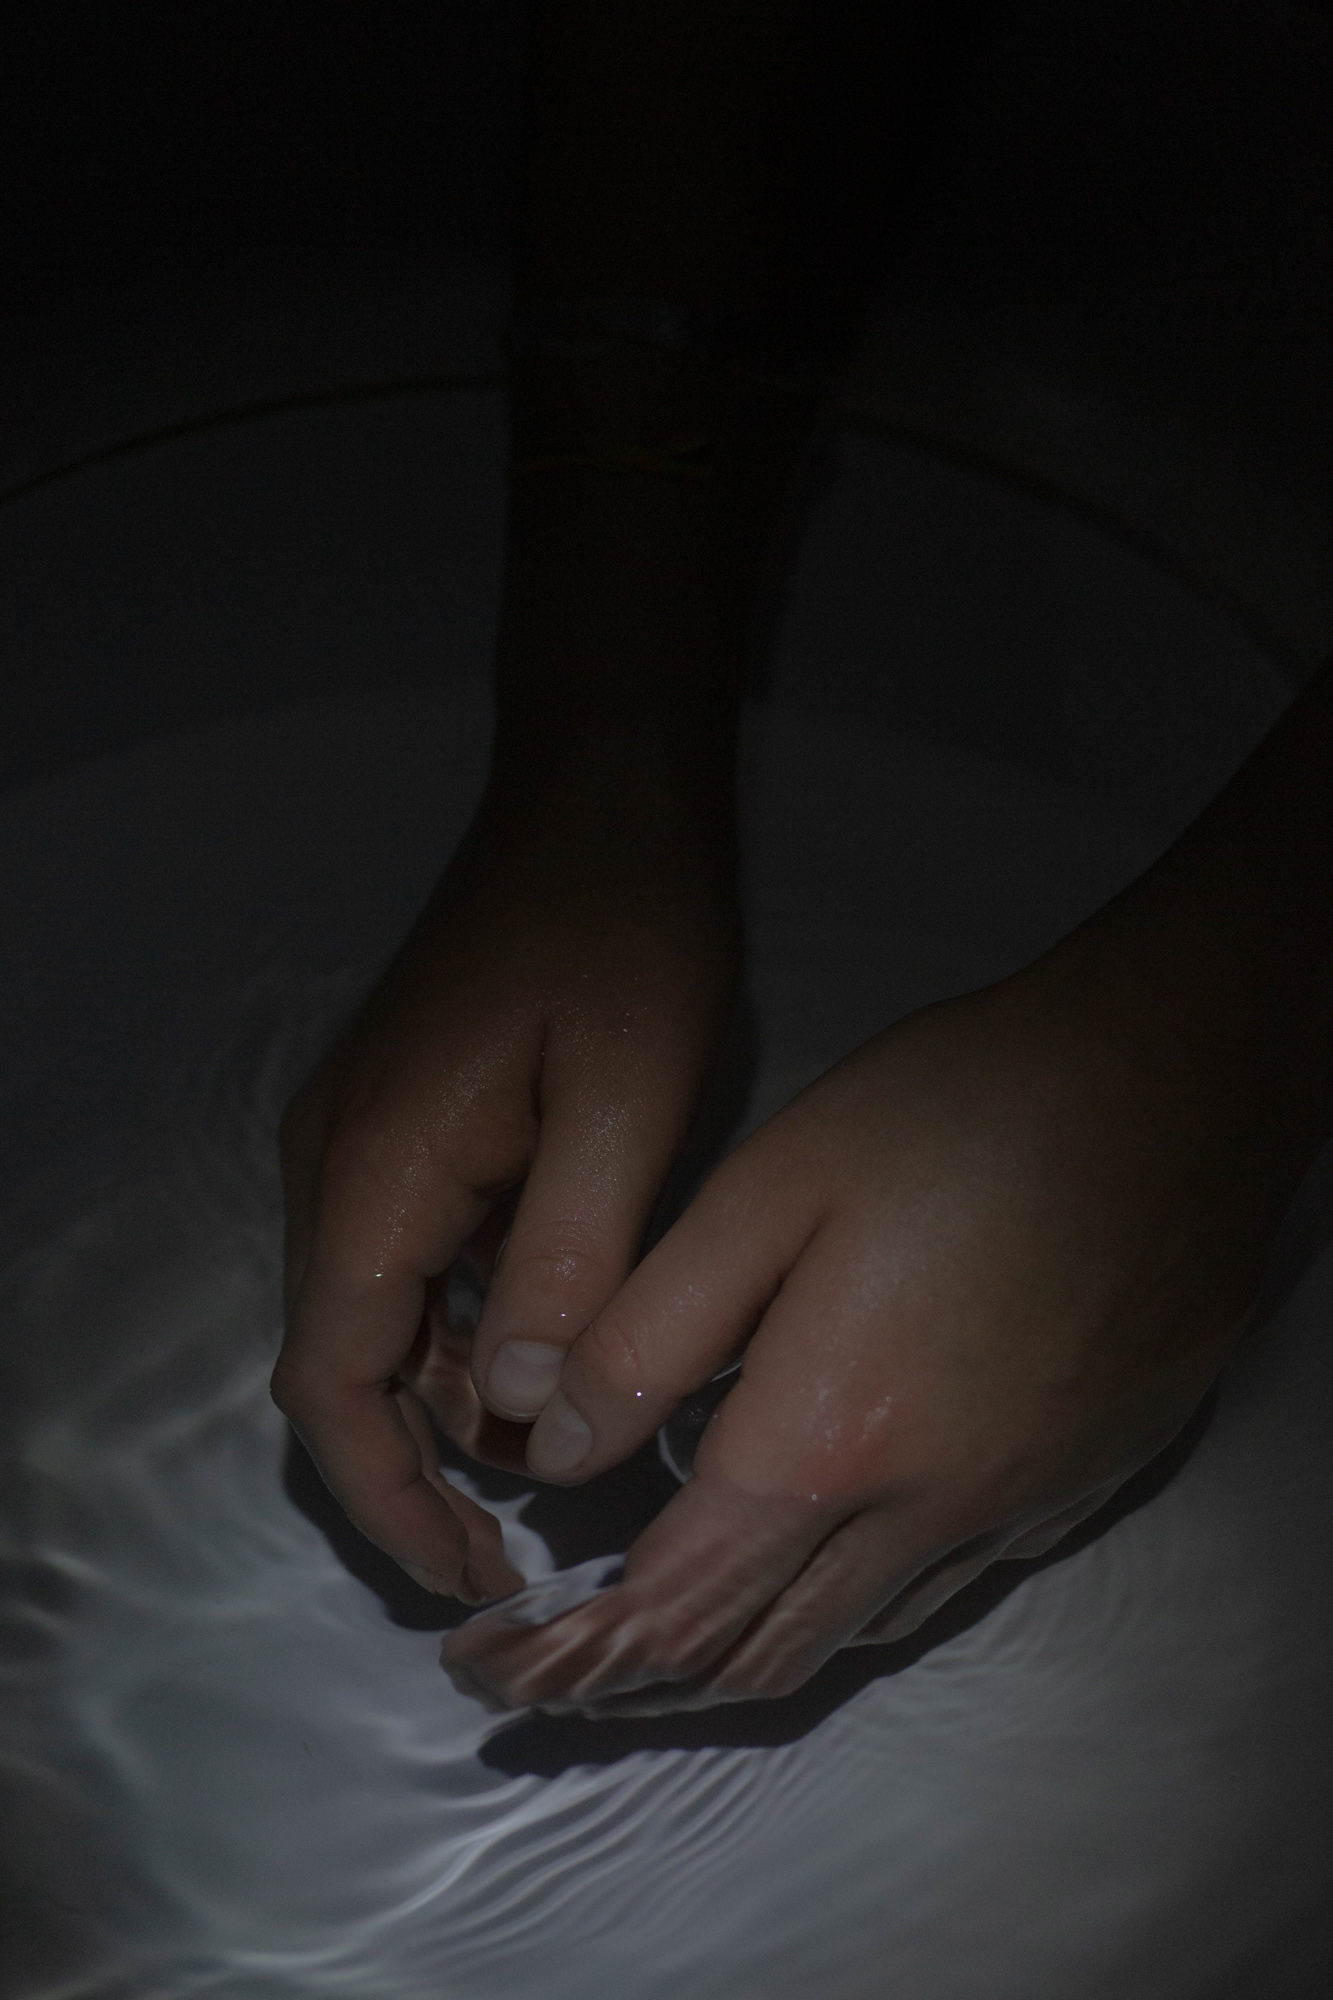 Elisa washes her hands. Lonigo, Italy, January 21, 2020.